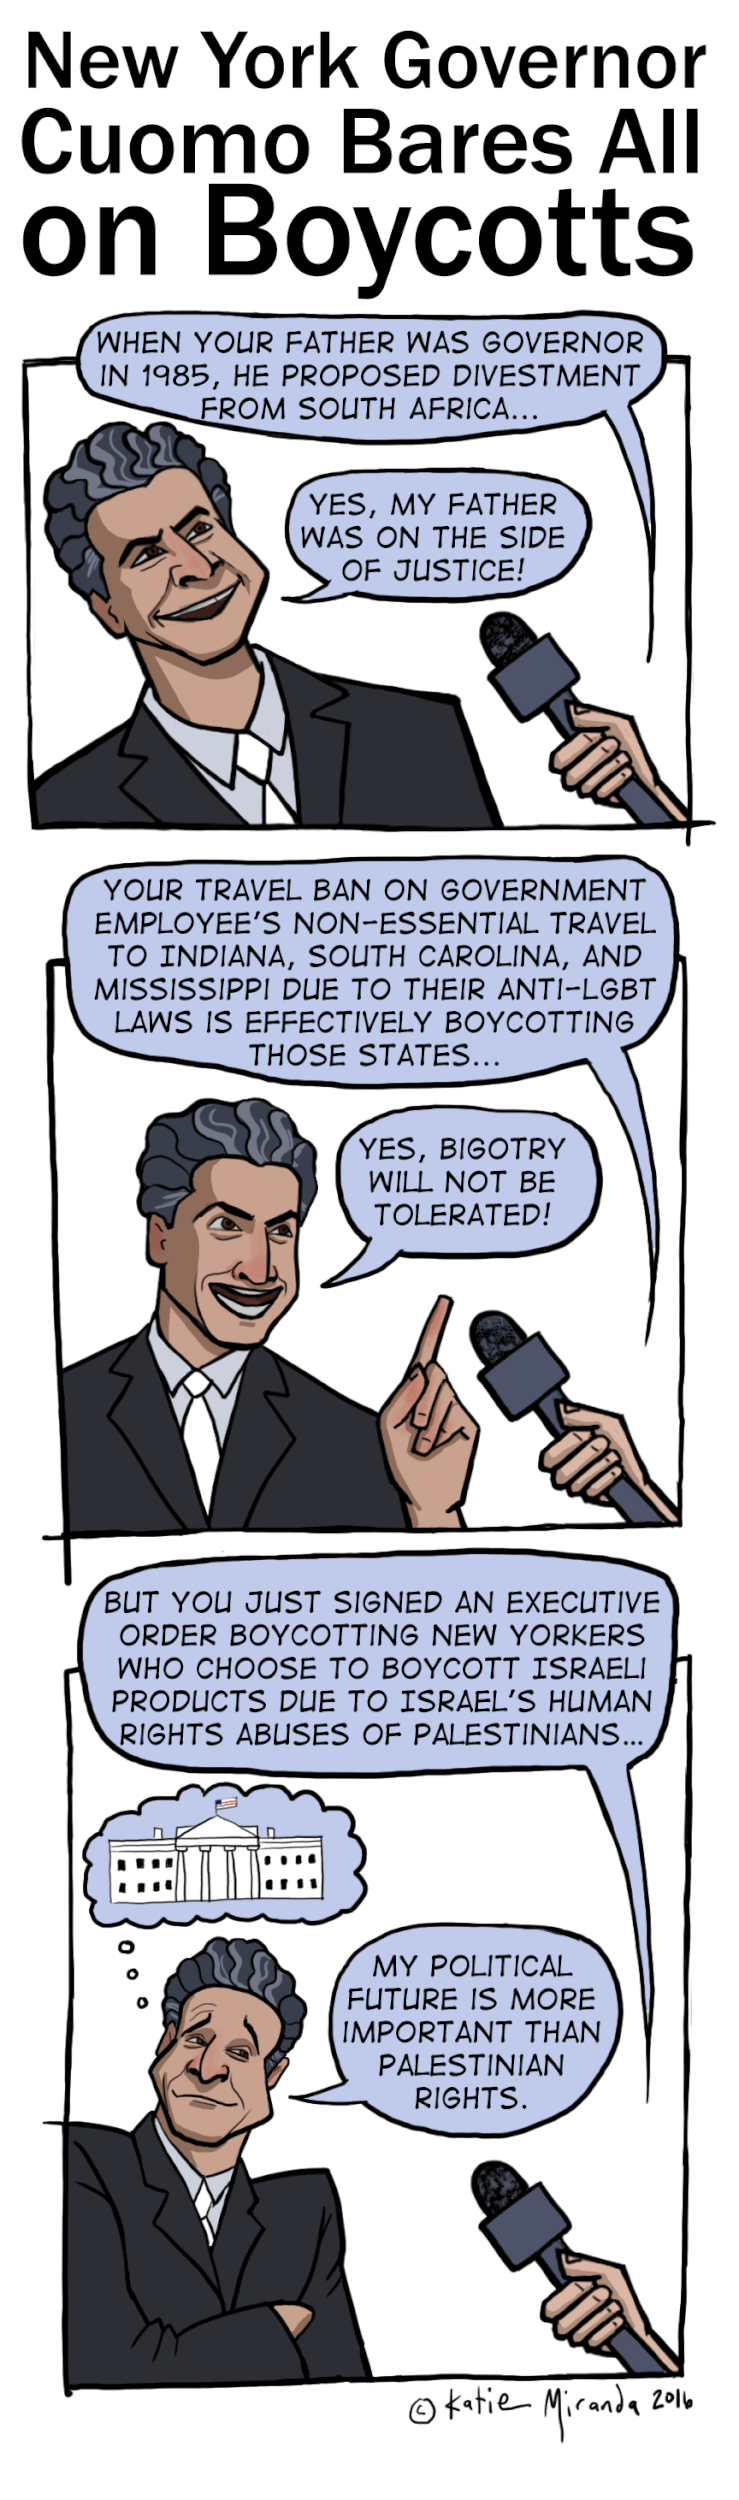 Cuomo's shifting standards on boycott, a cartoon by Katie Miranda